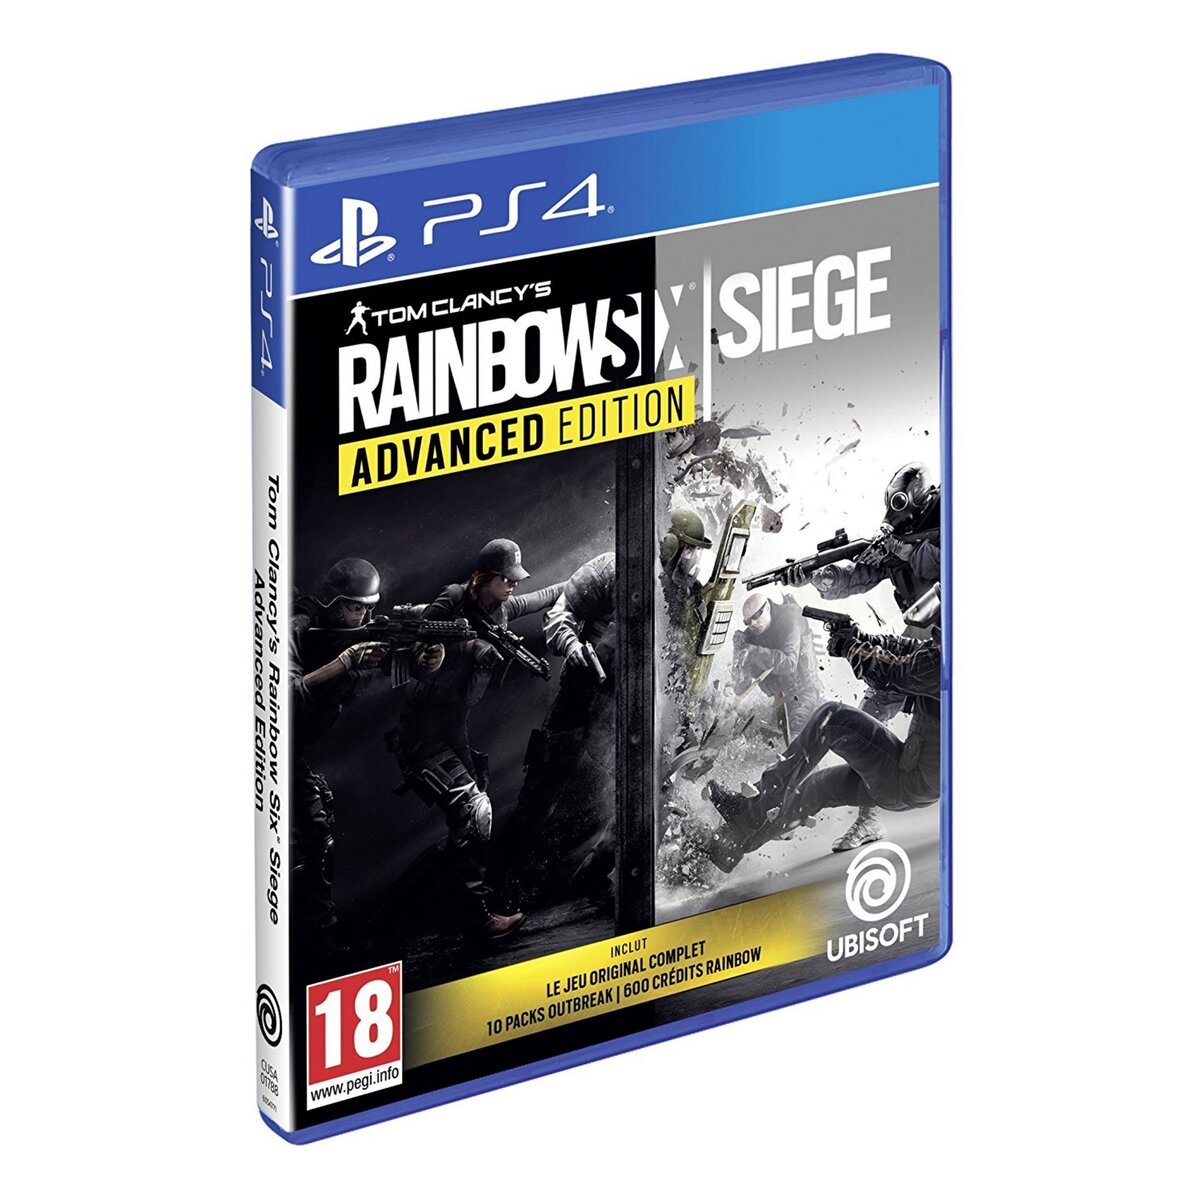 Tom Clancy's Rainbow Six : Siege - Advanced Edition PS4